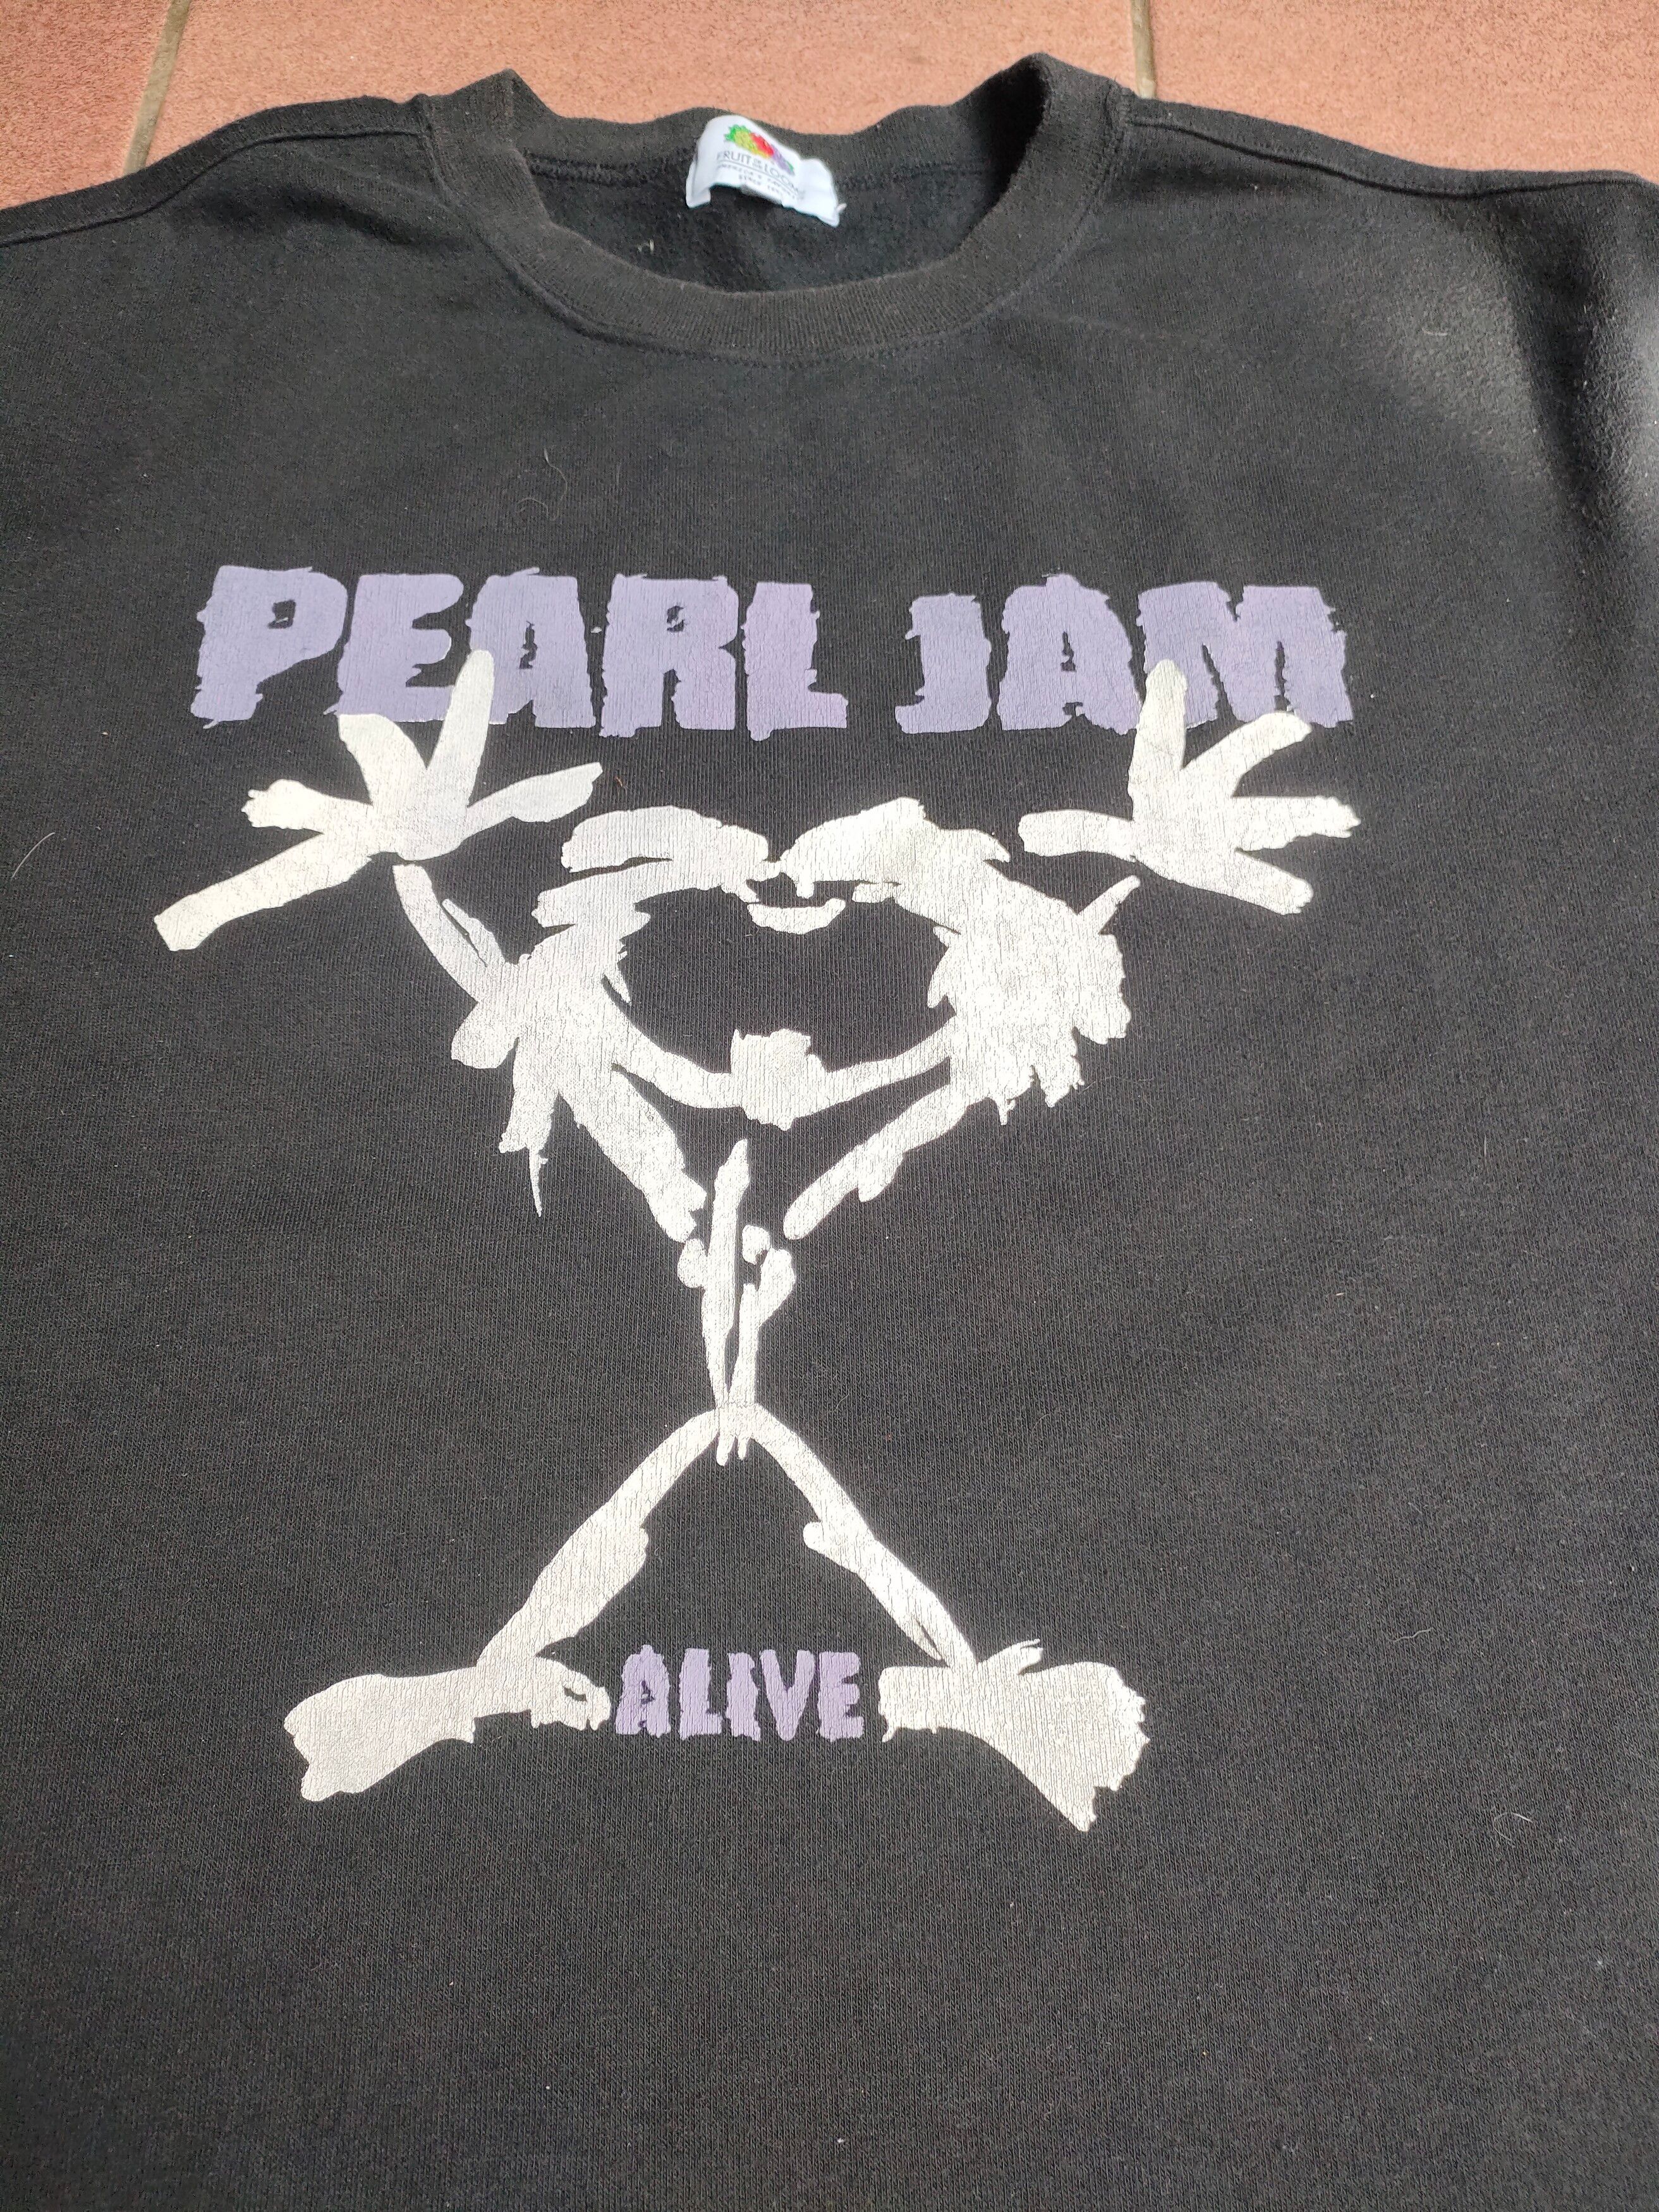 Vintage Pearljam - Alive - 4